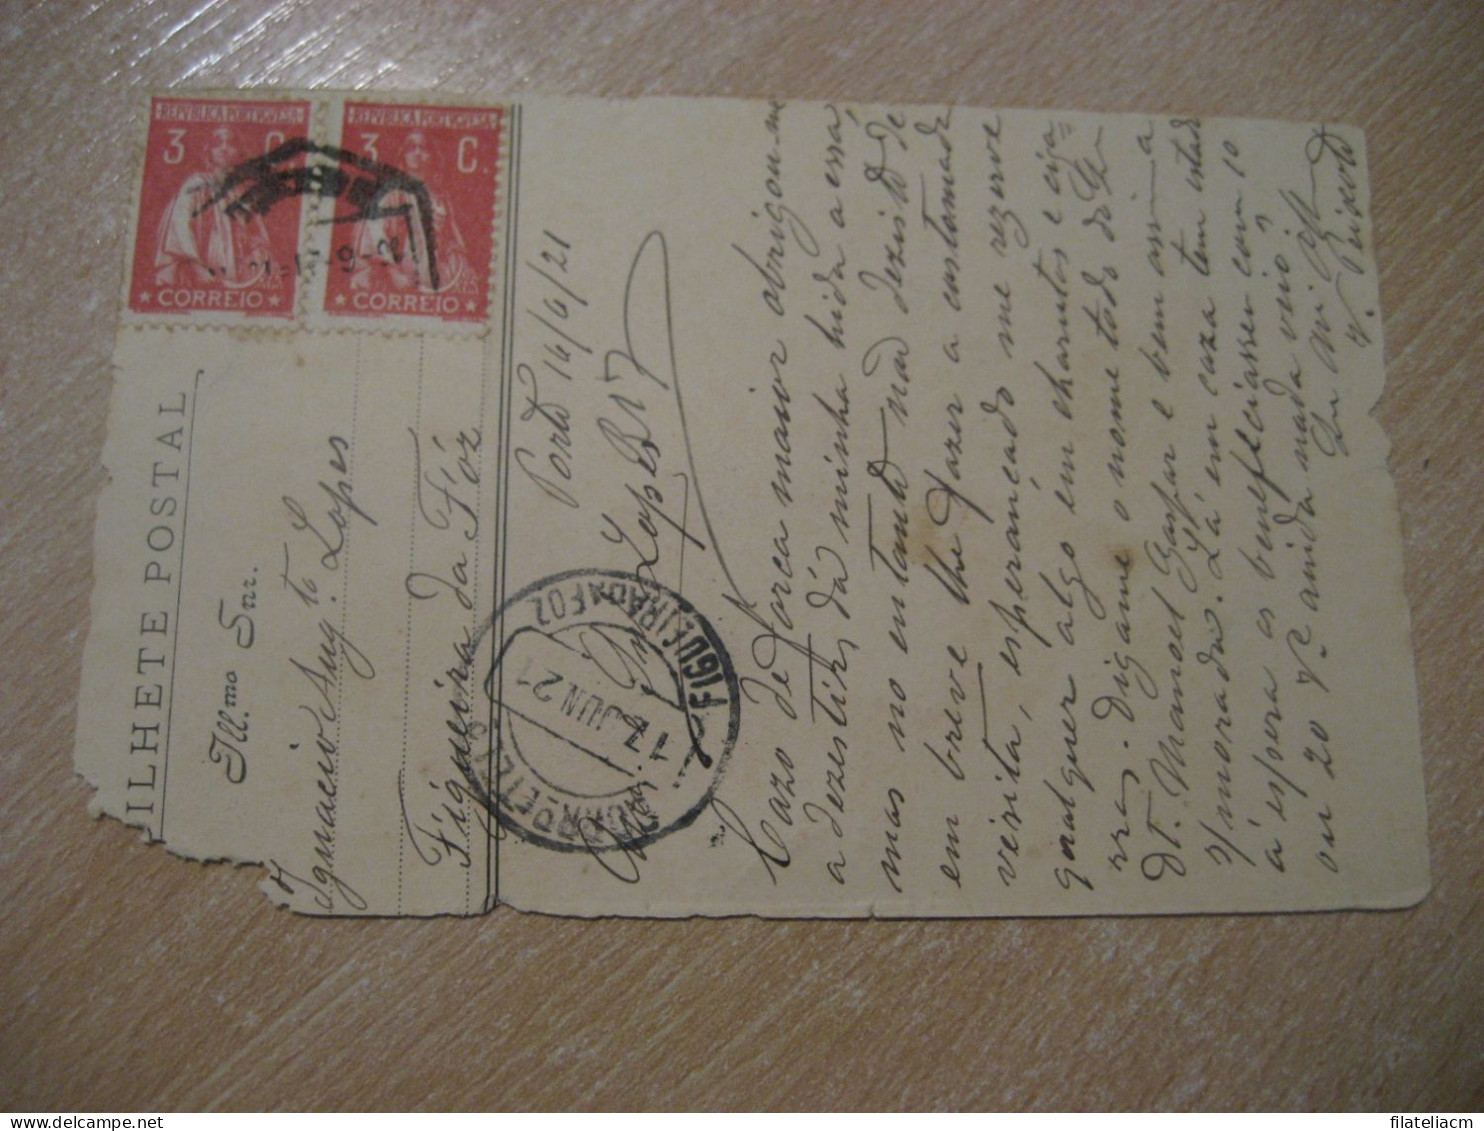 COINTREAU Licor PORTO 1921 To Figueira Da Foz Damaged Bilhete Postal Postcard PORTUGAL - Reclame